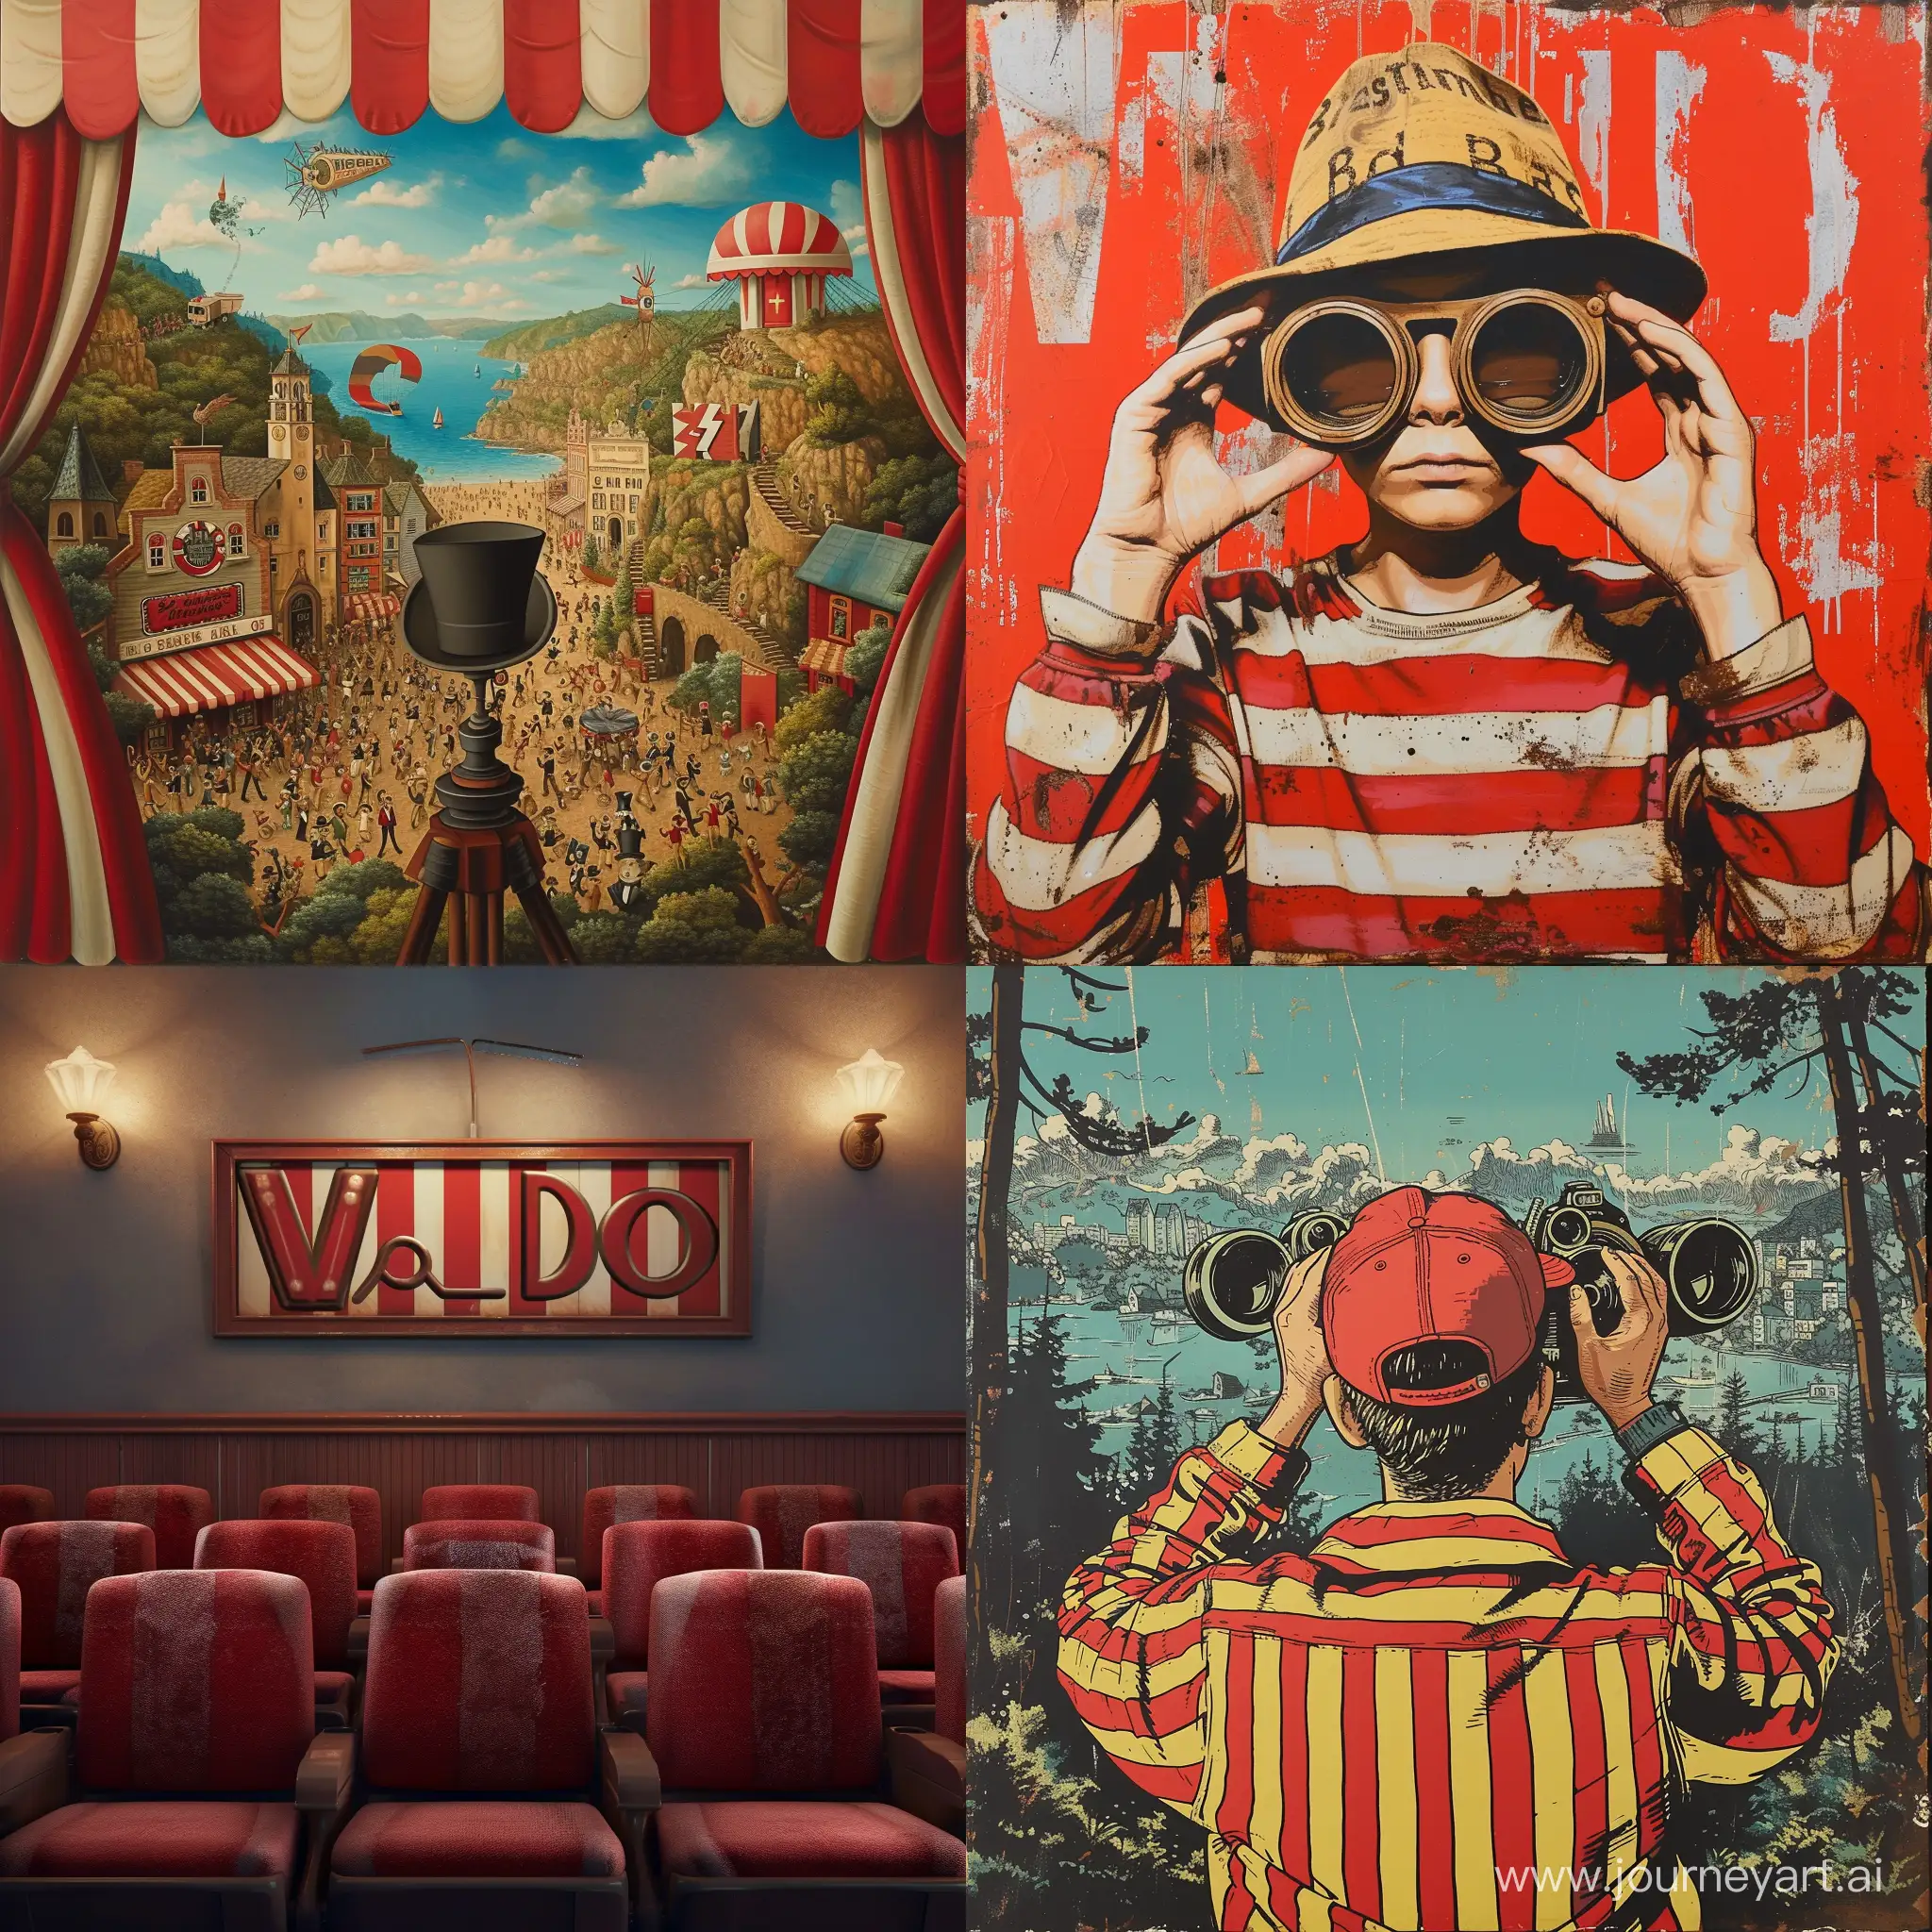 Cinematic-Waldo-Search-Wheres-Waldo-in-Stylish-Movie-Scene